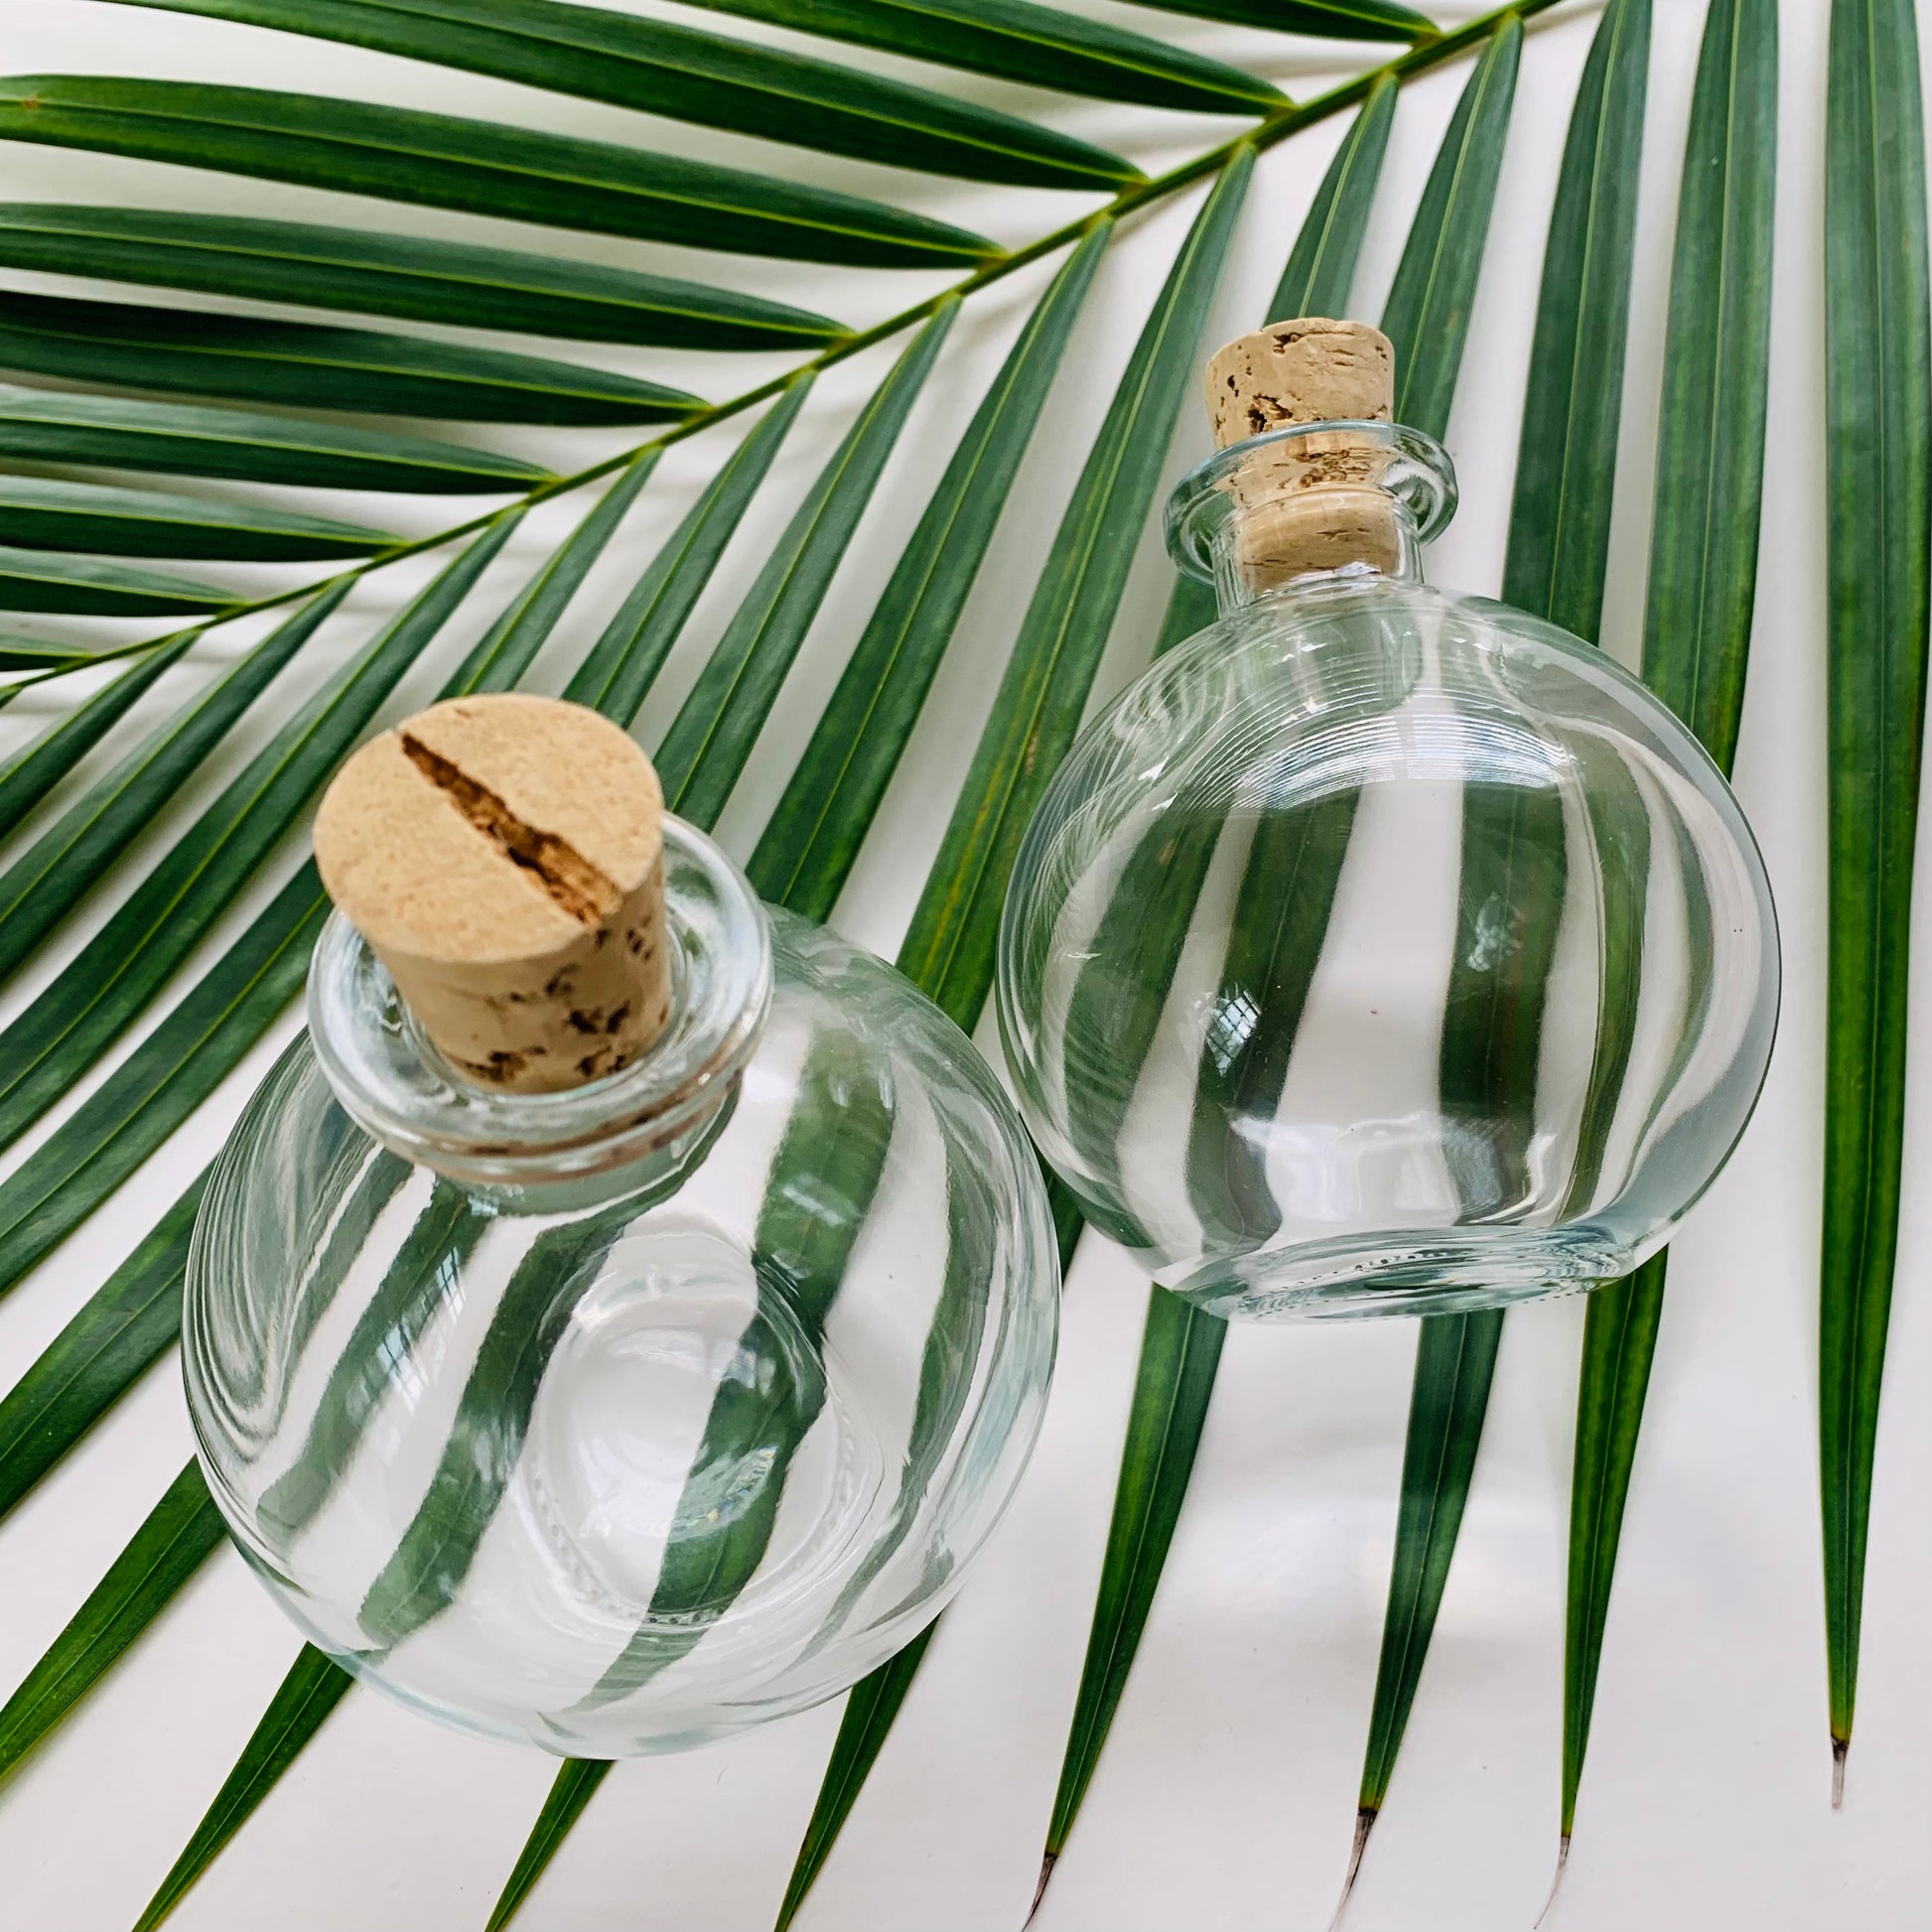 Decorative Glass Bottle with Cork Stopper (9 oz. Potion Bottles / 2 Pcs)